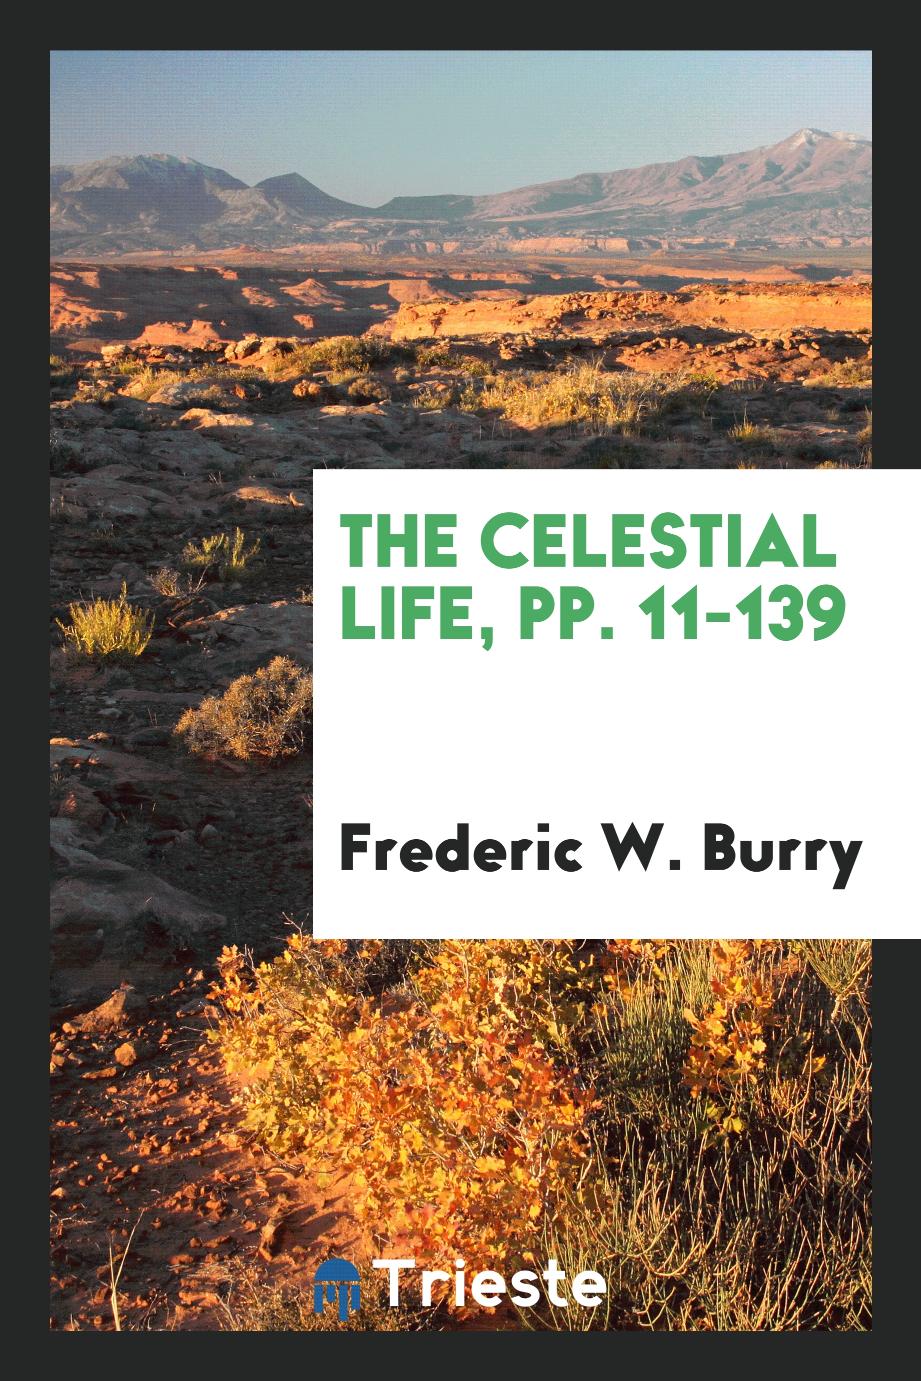 The Celestial Life, pp. 11-139